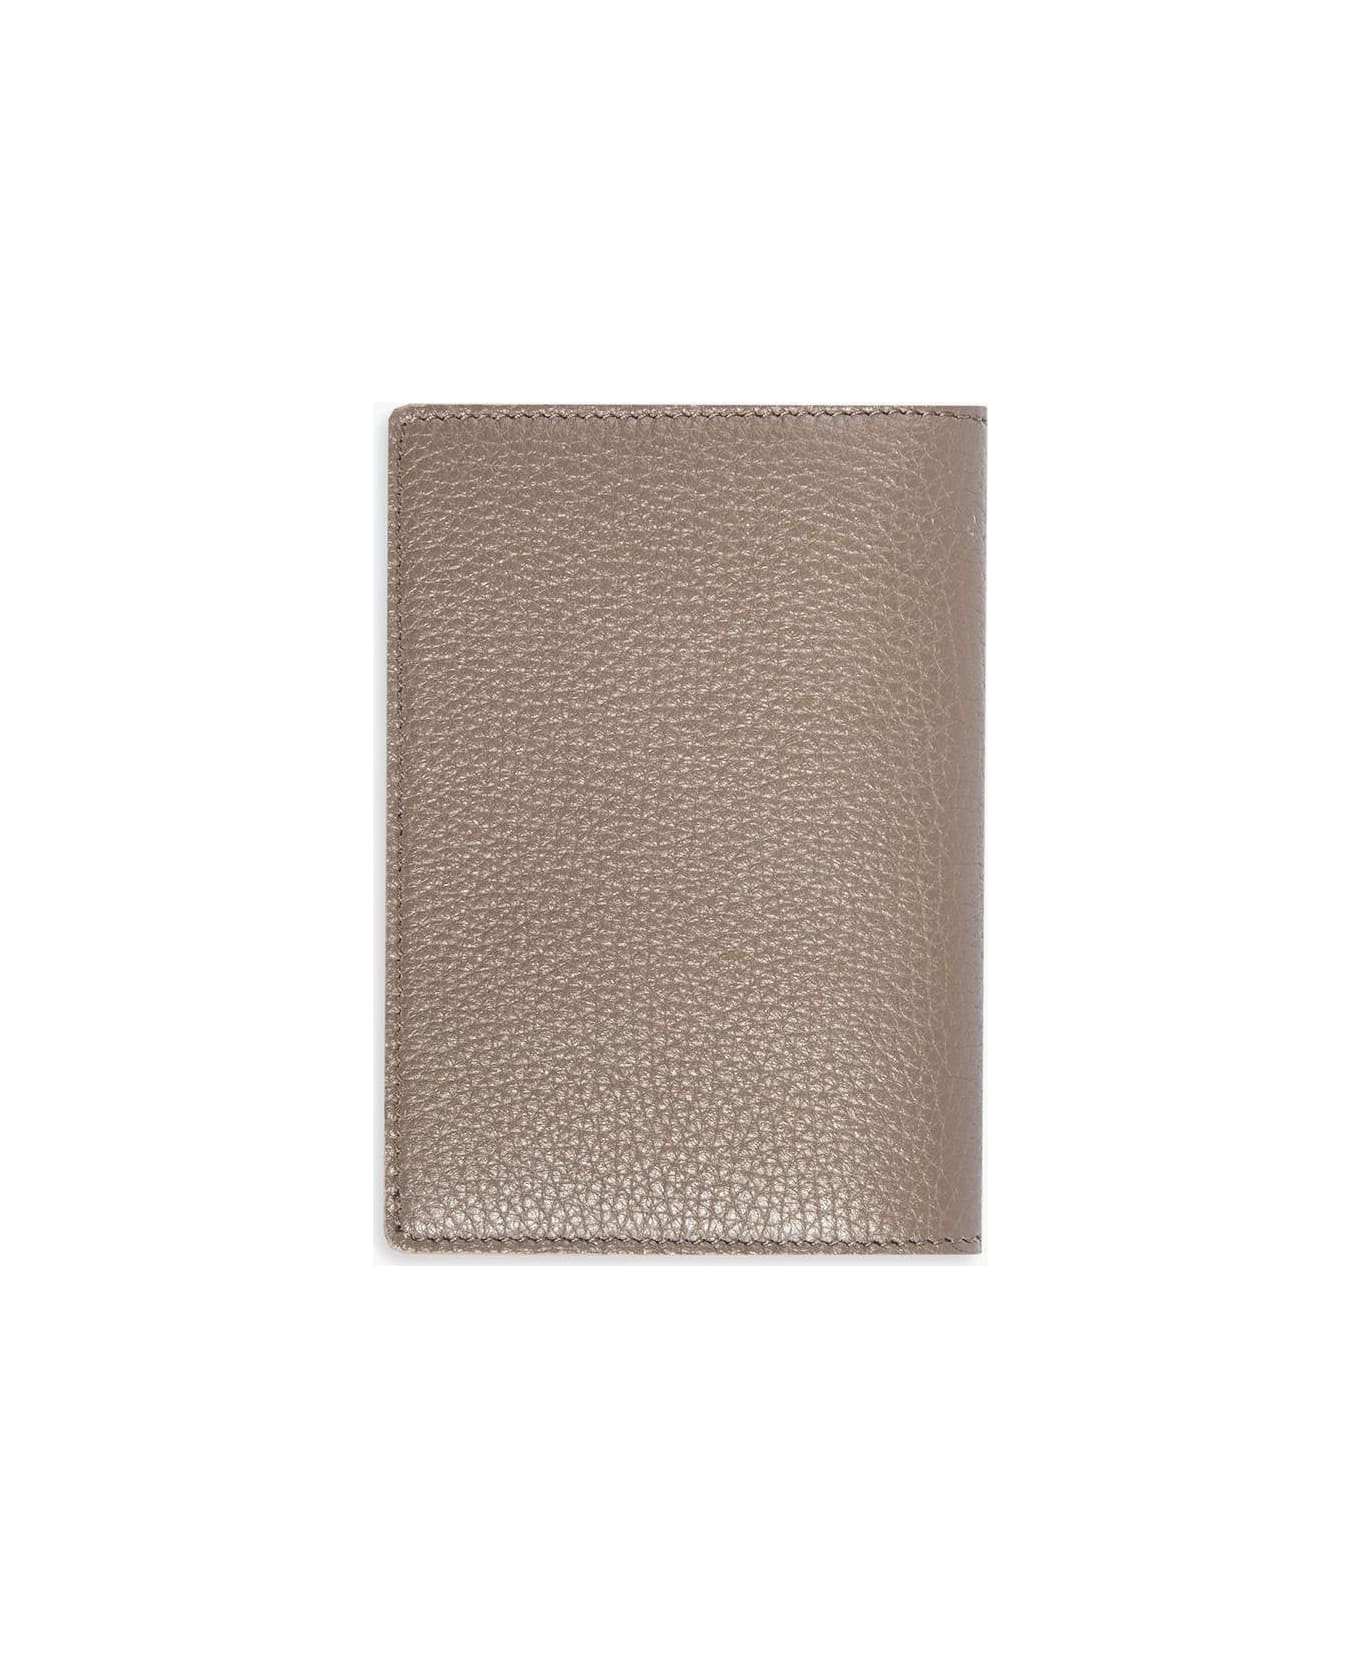 Larusmiani Passport Cover 'fiumicino' Wallet - Brown 財布